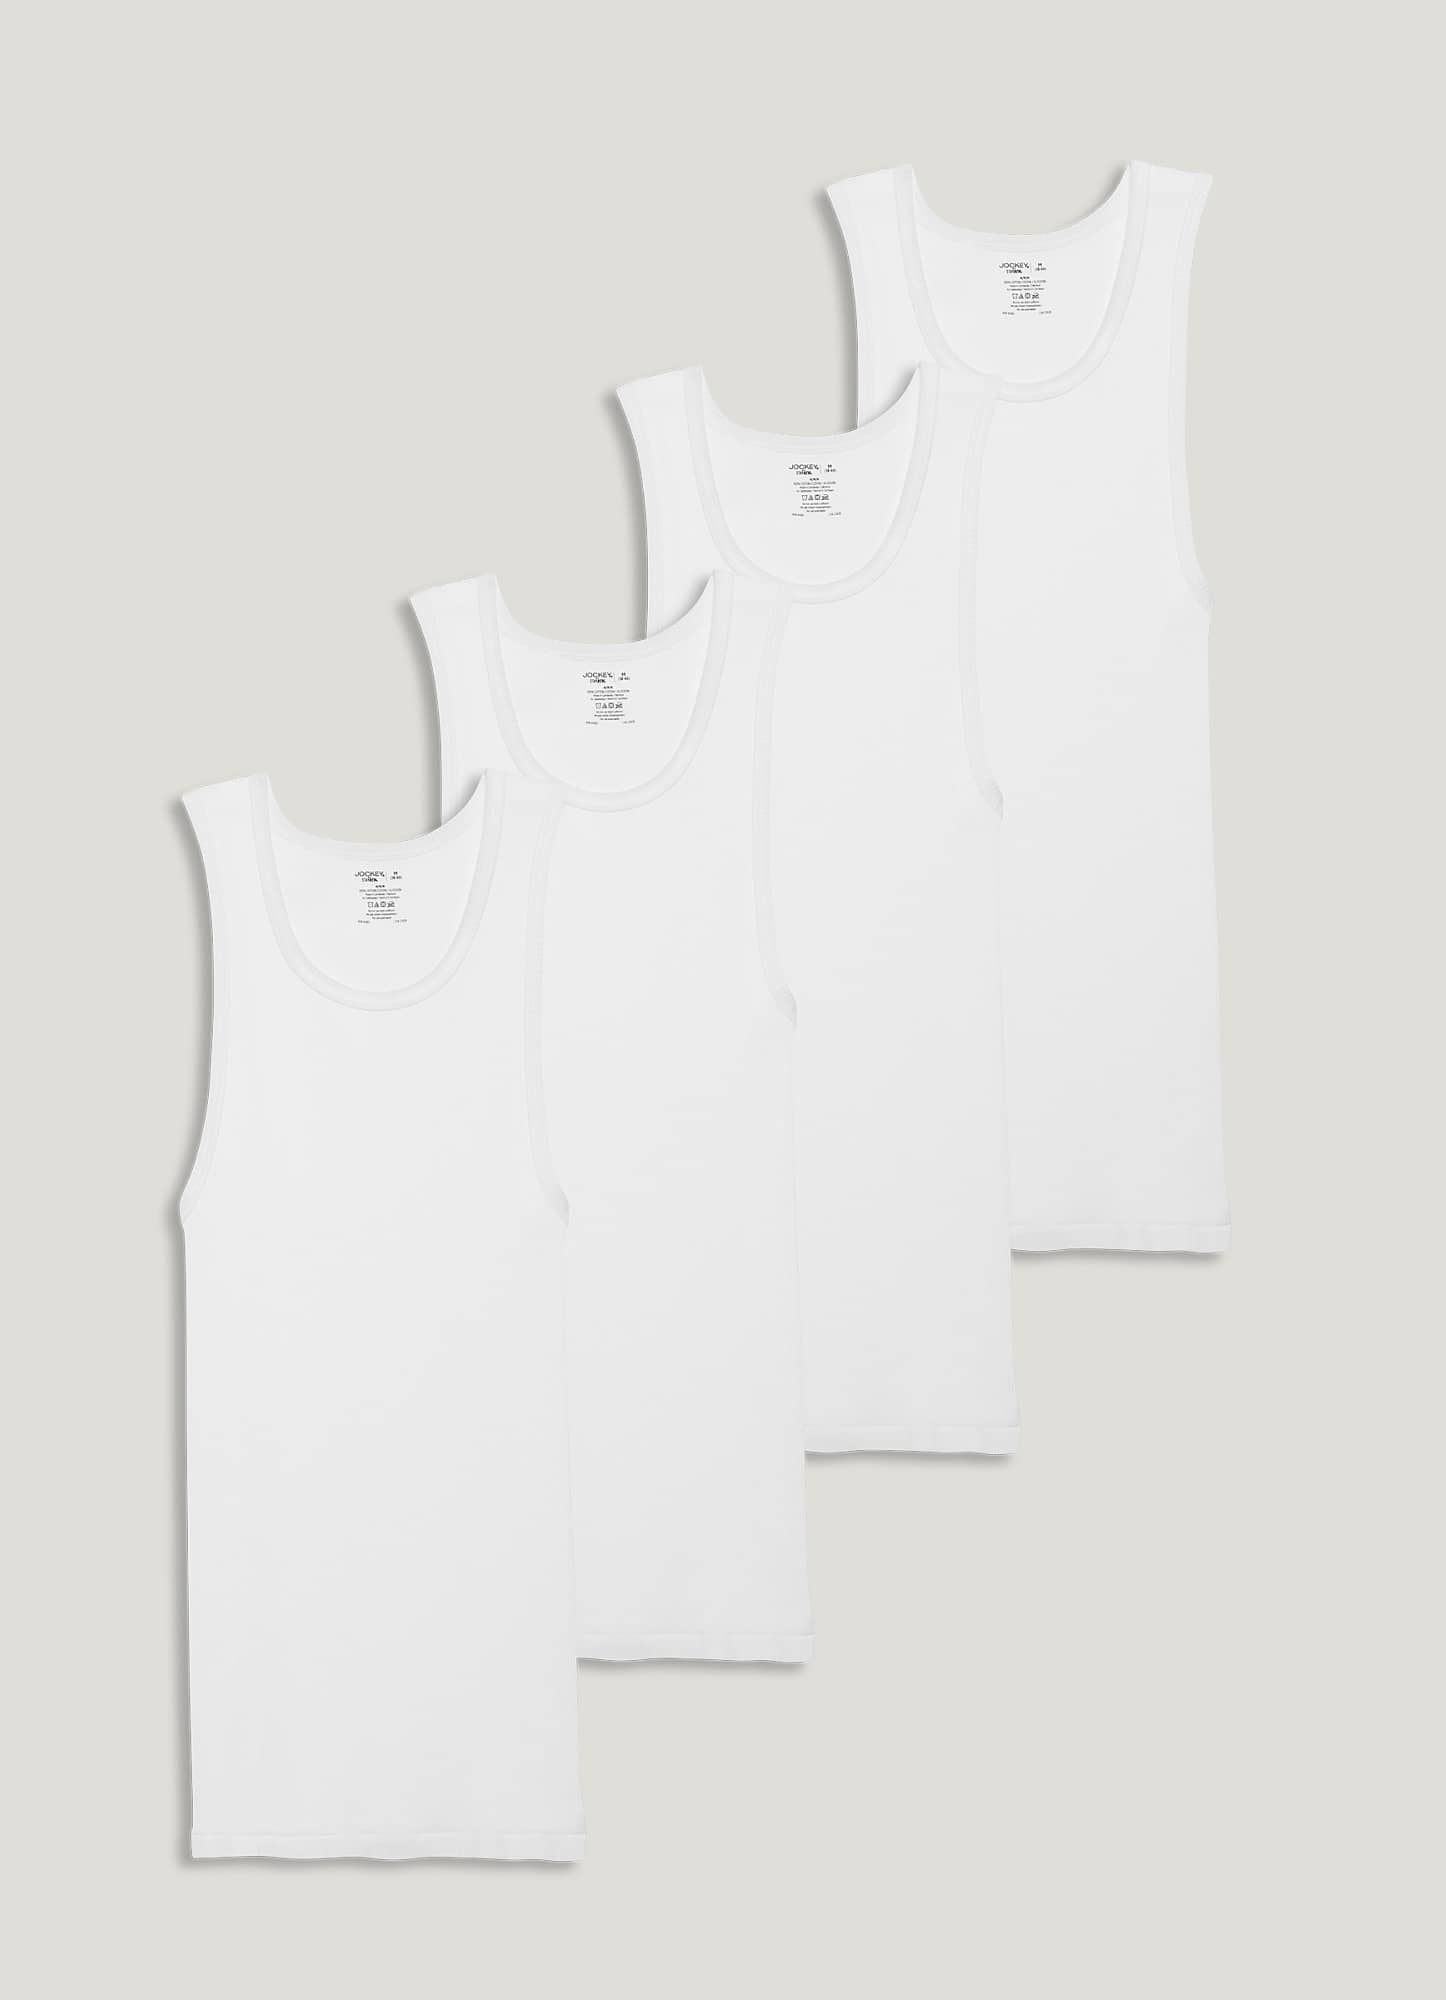 Value Packs of Men's Black Grey & White Ribbed 100% Cotton Tank Top A  Shirts Undershirt 